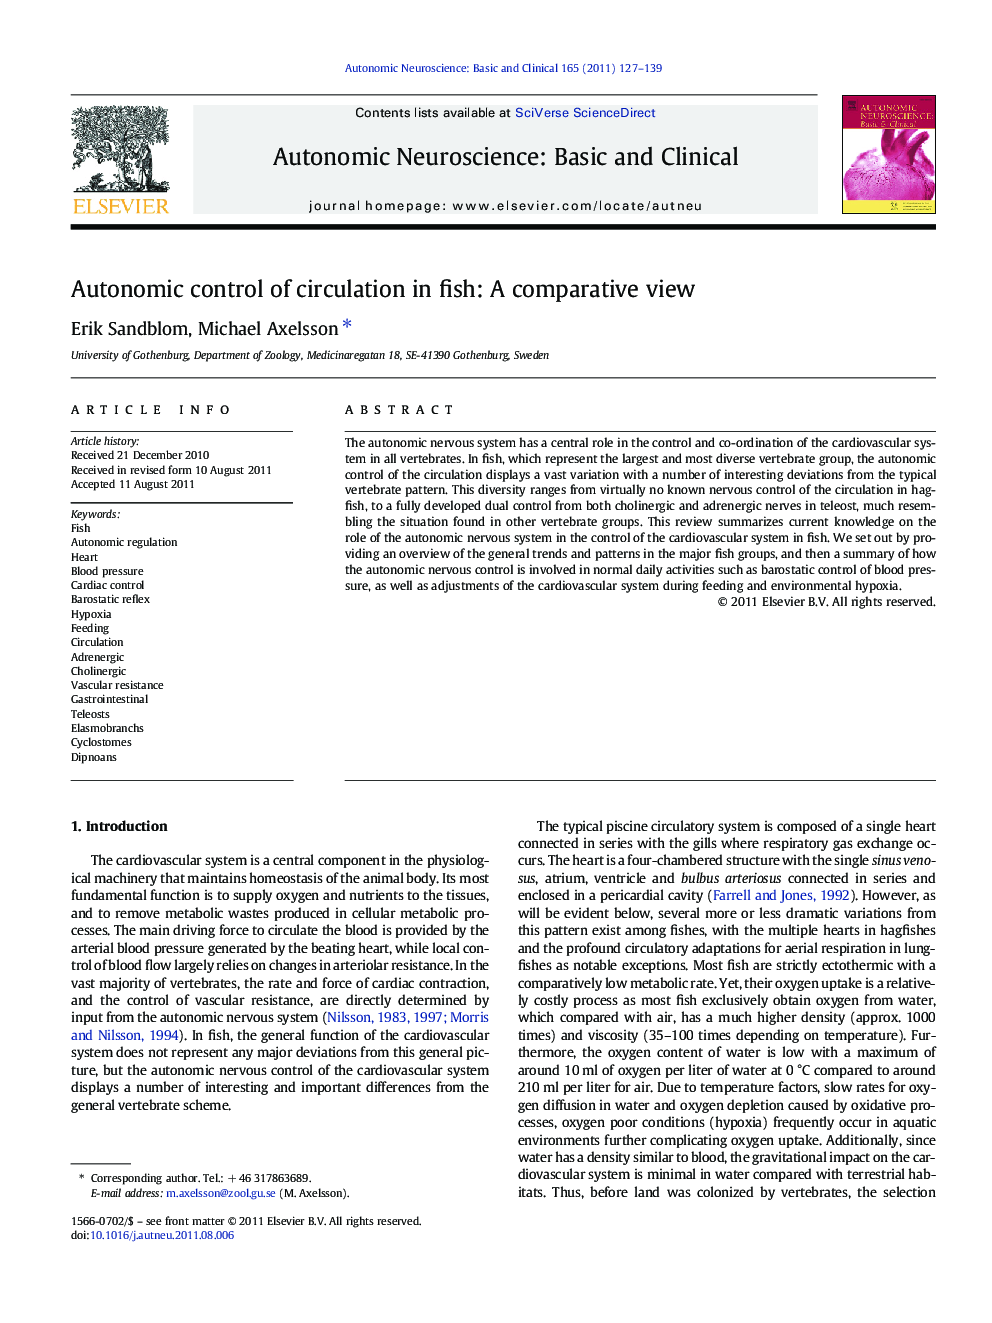 Autonomic control of circulation in fish: A comparative view